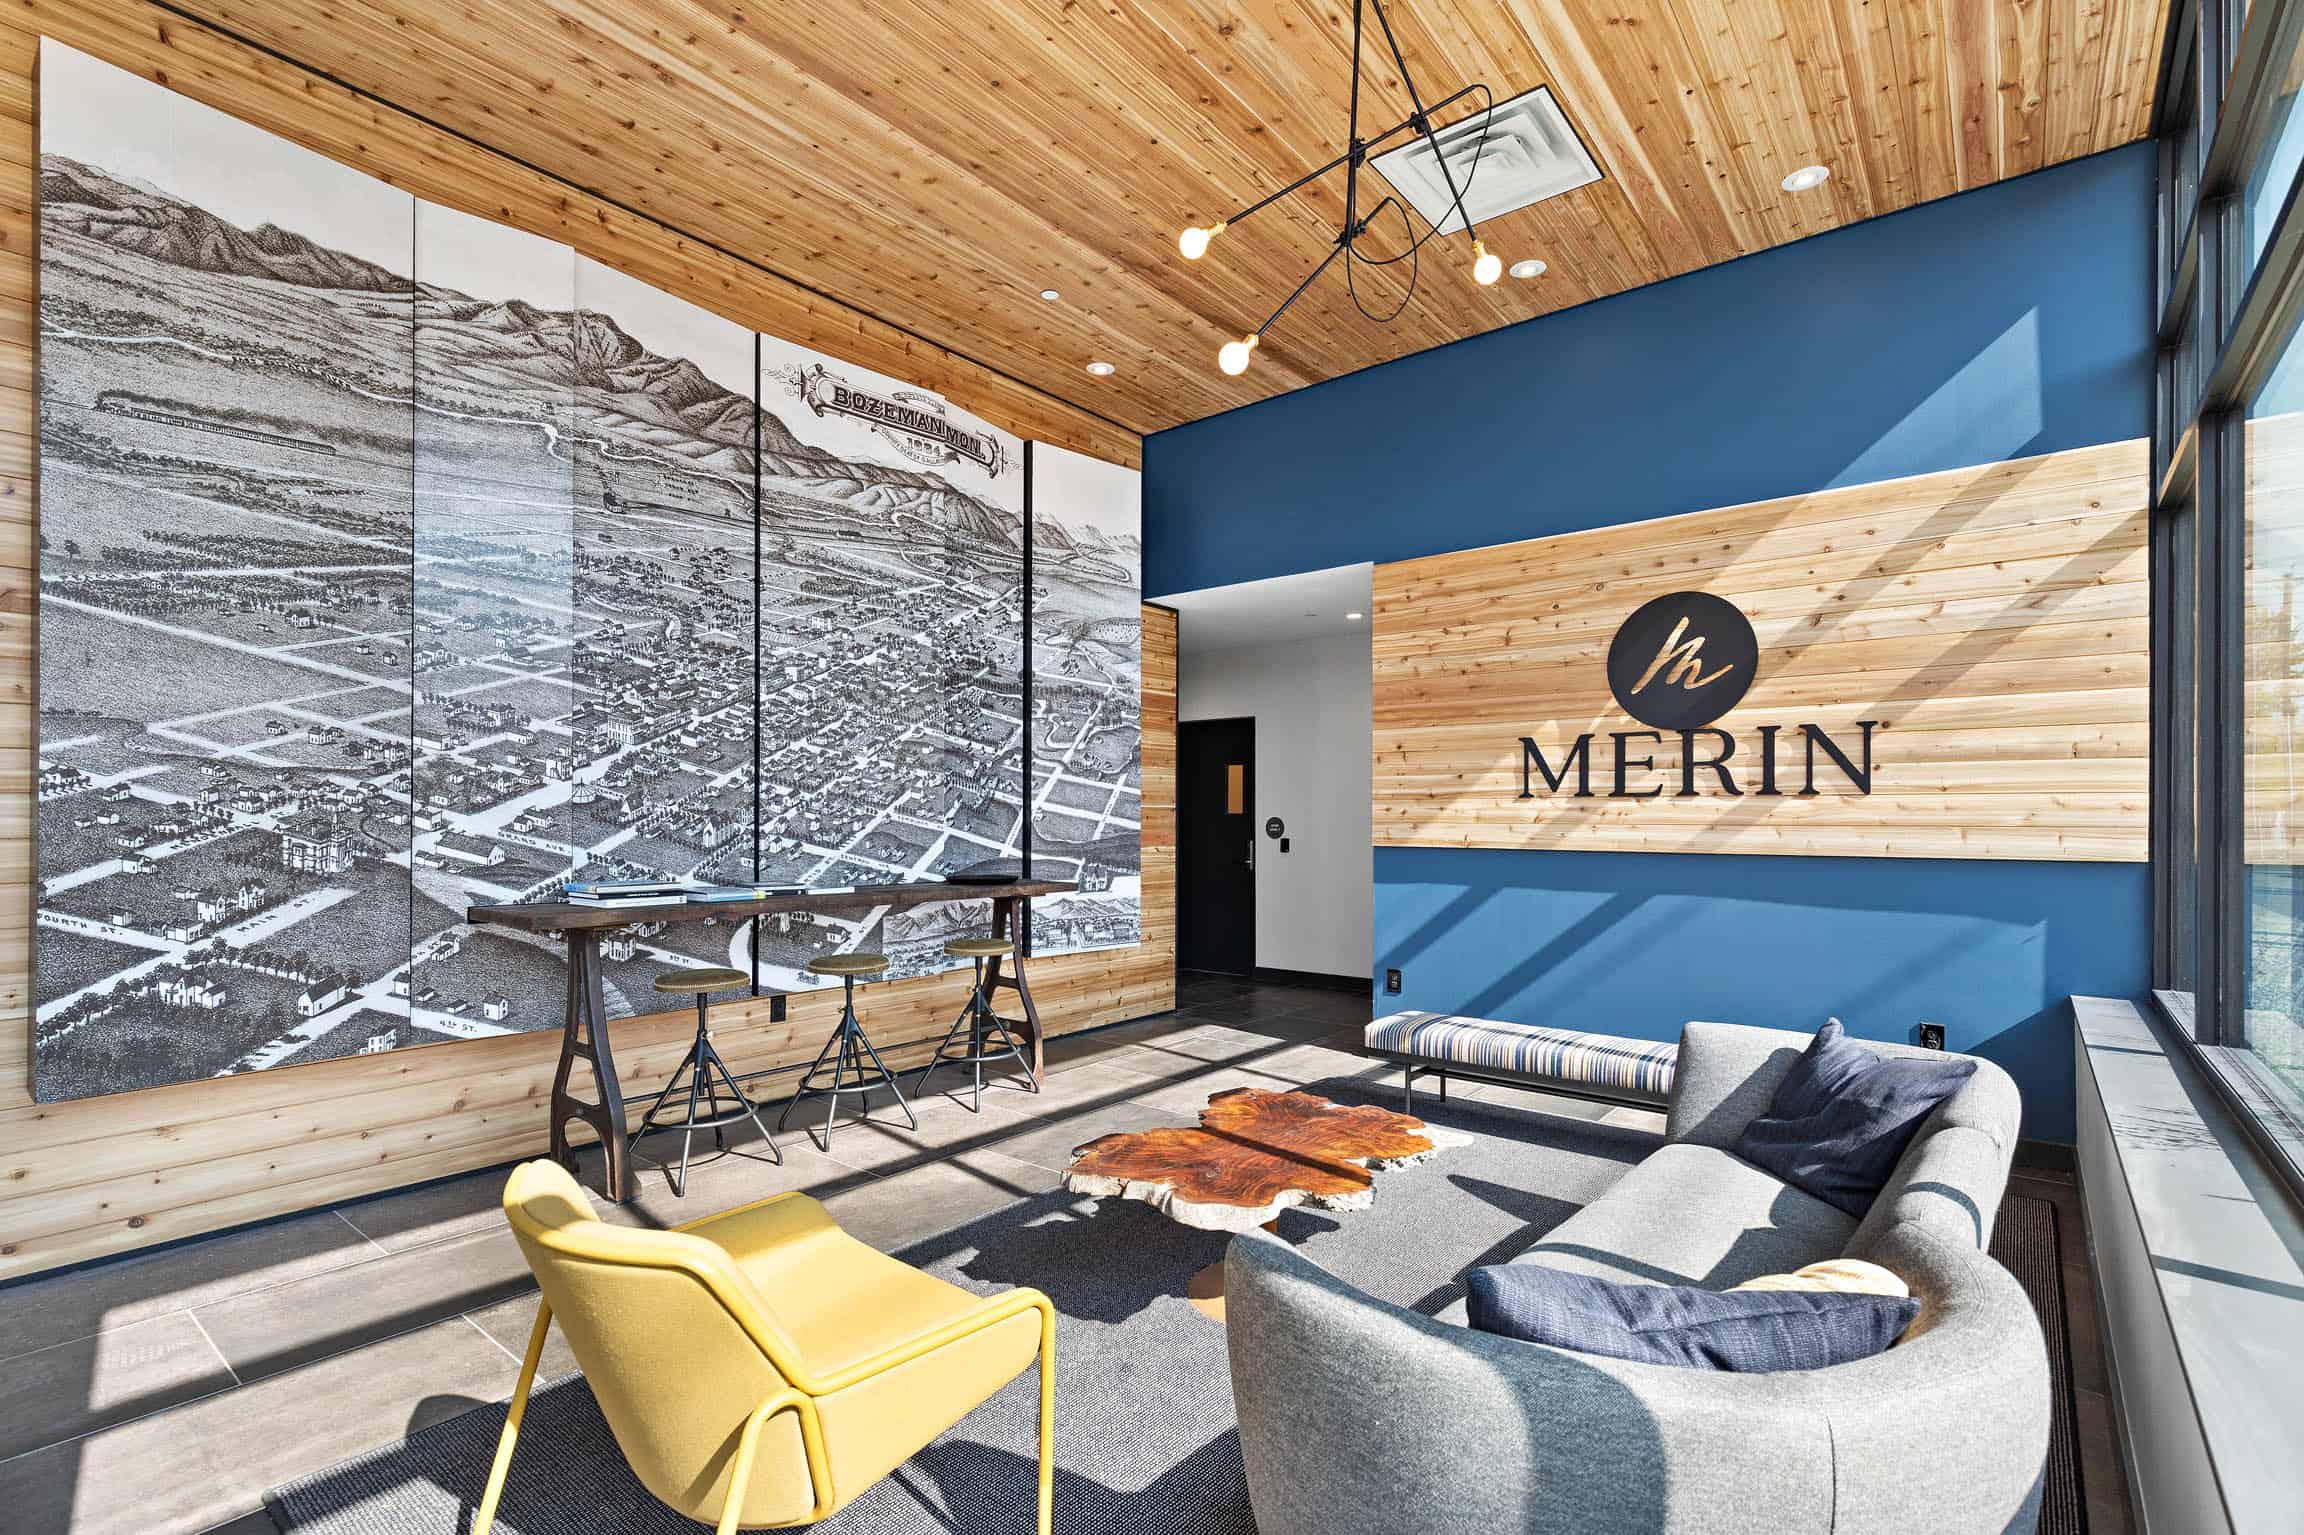 Merin, For Sale Residential, Investment Property, Real Estate Fund, Landrock, Landrock LP, WHIREP, WHI Real Estate Partners